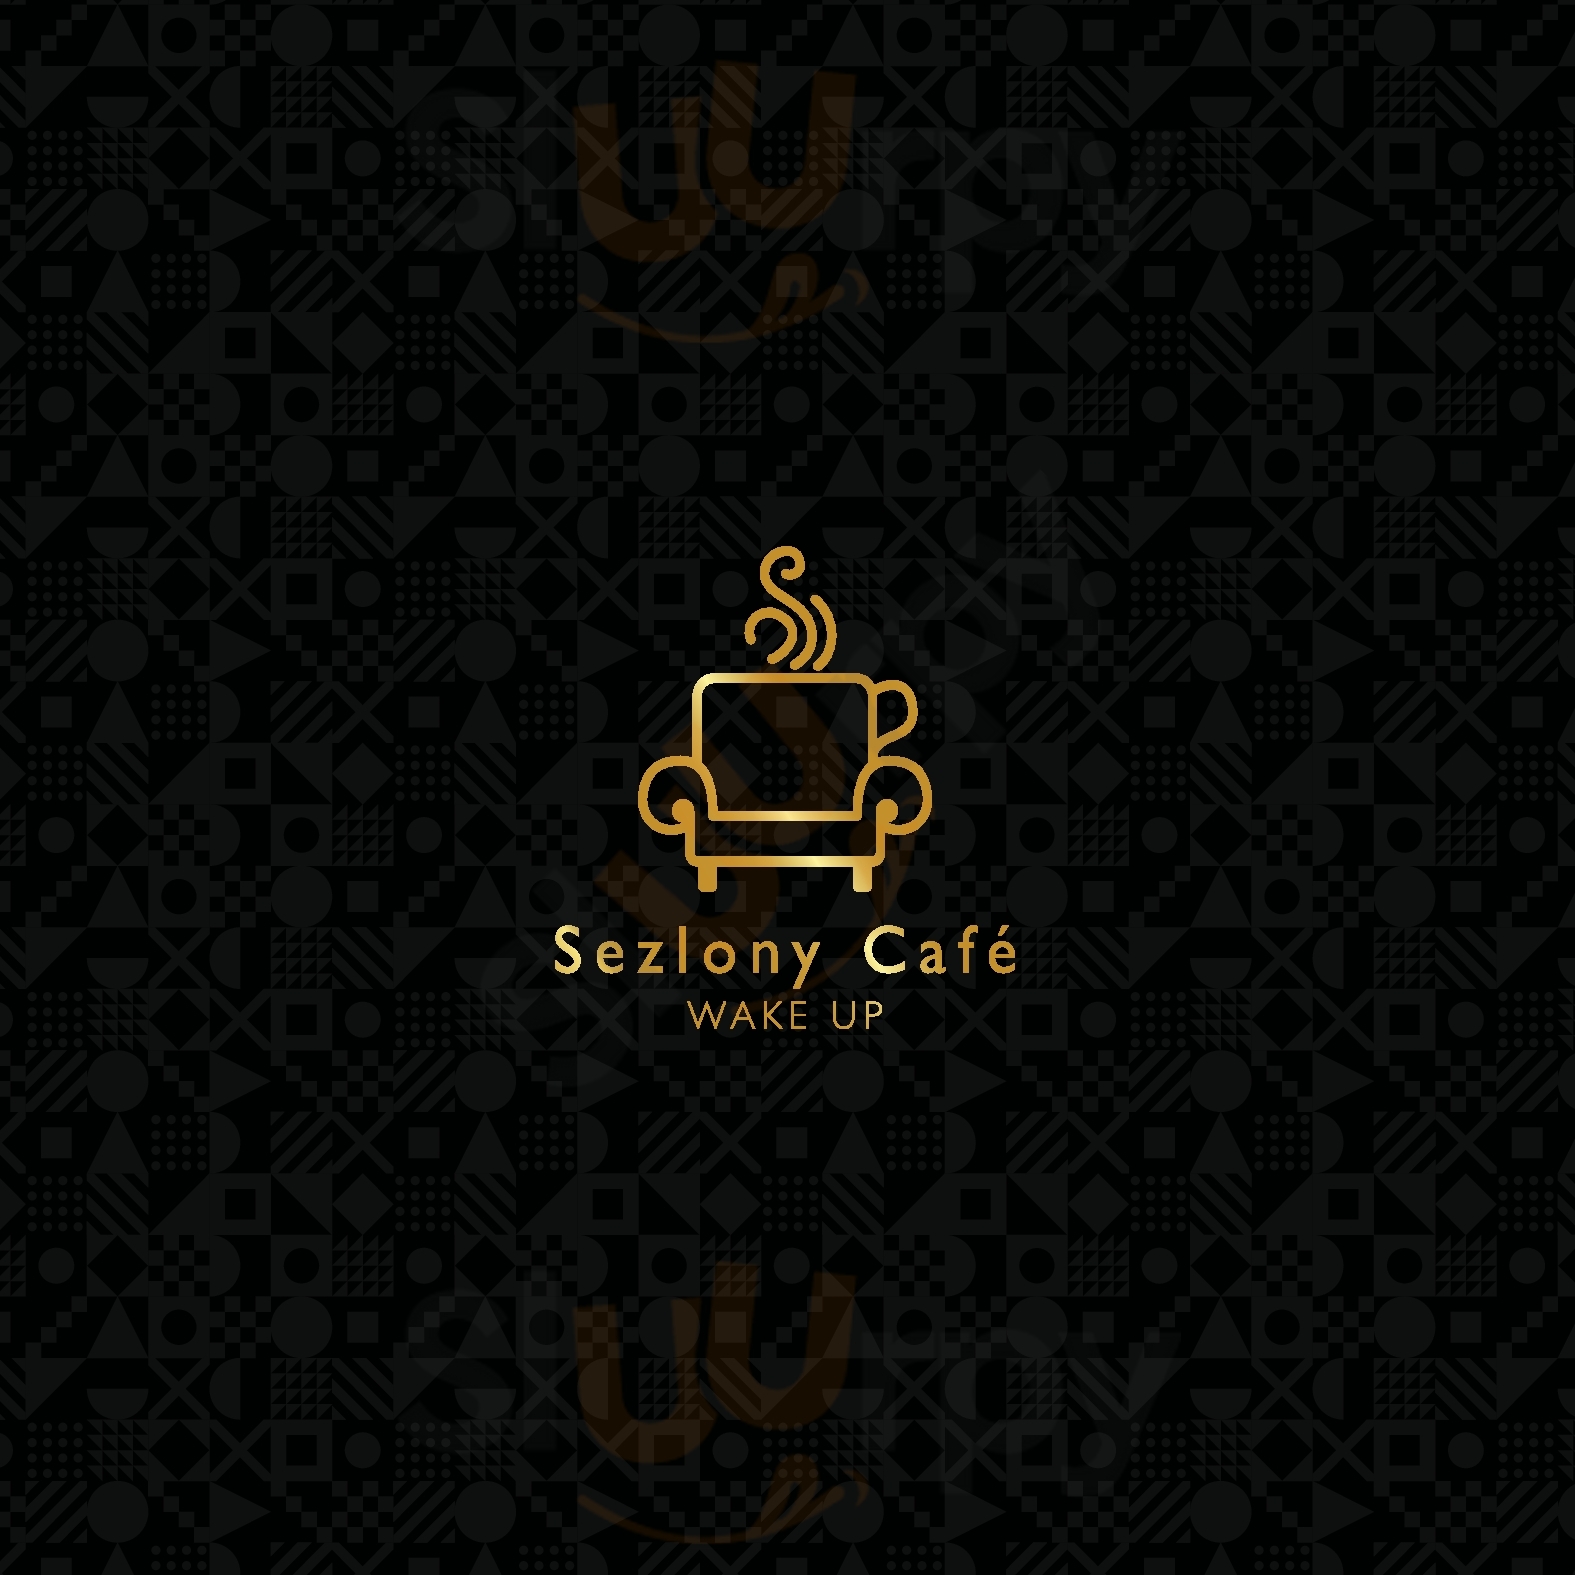 Sezlony Cafe Törökbálint Menu - 1